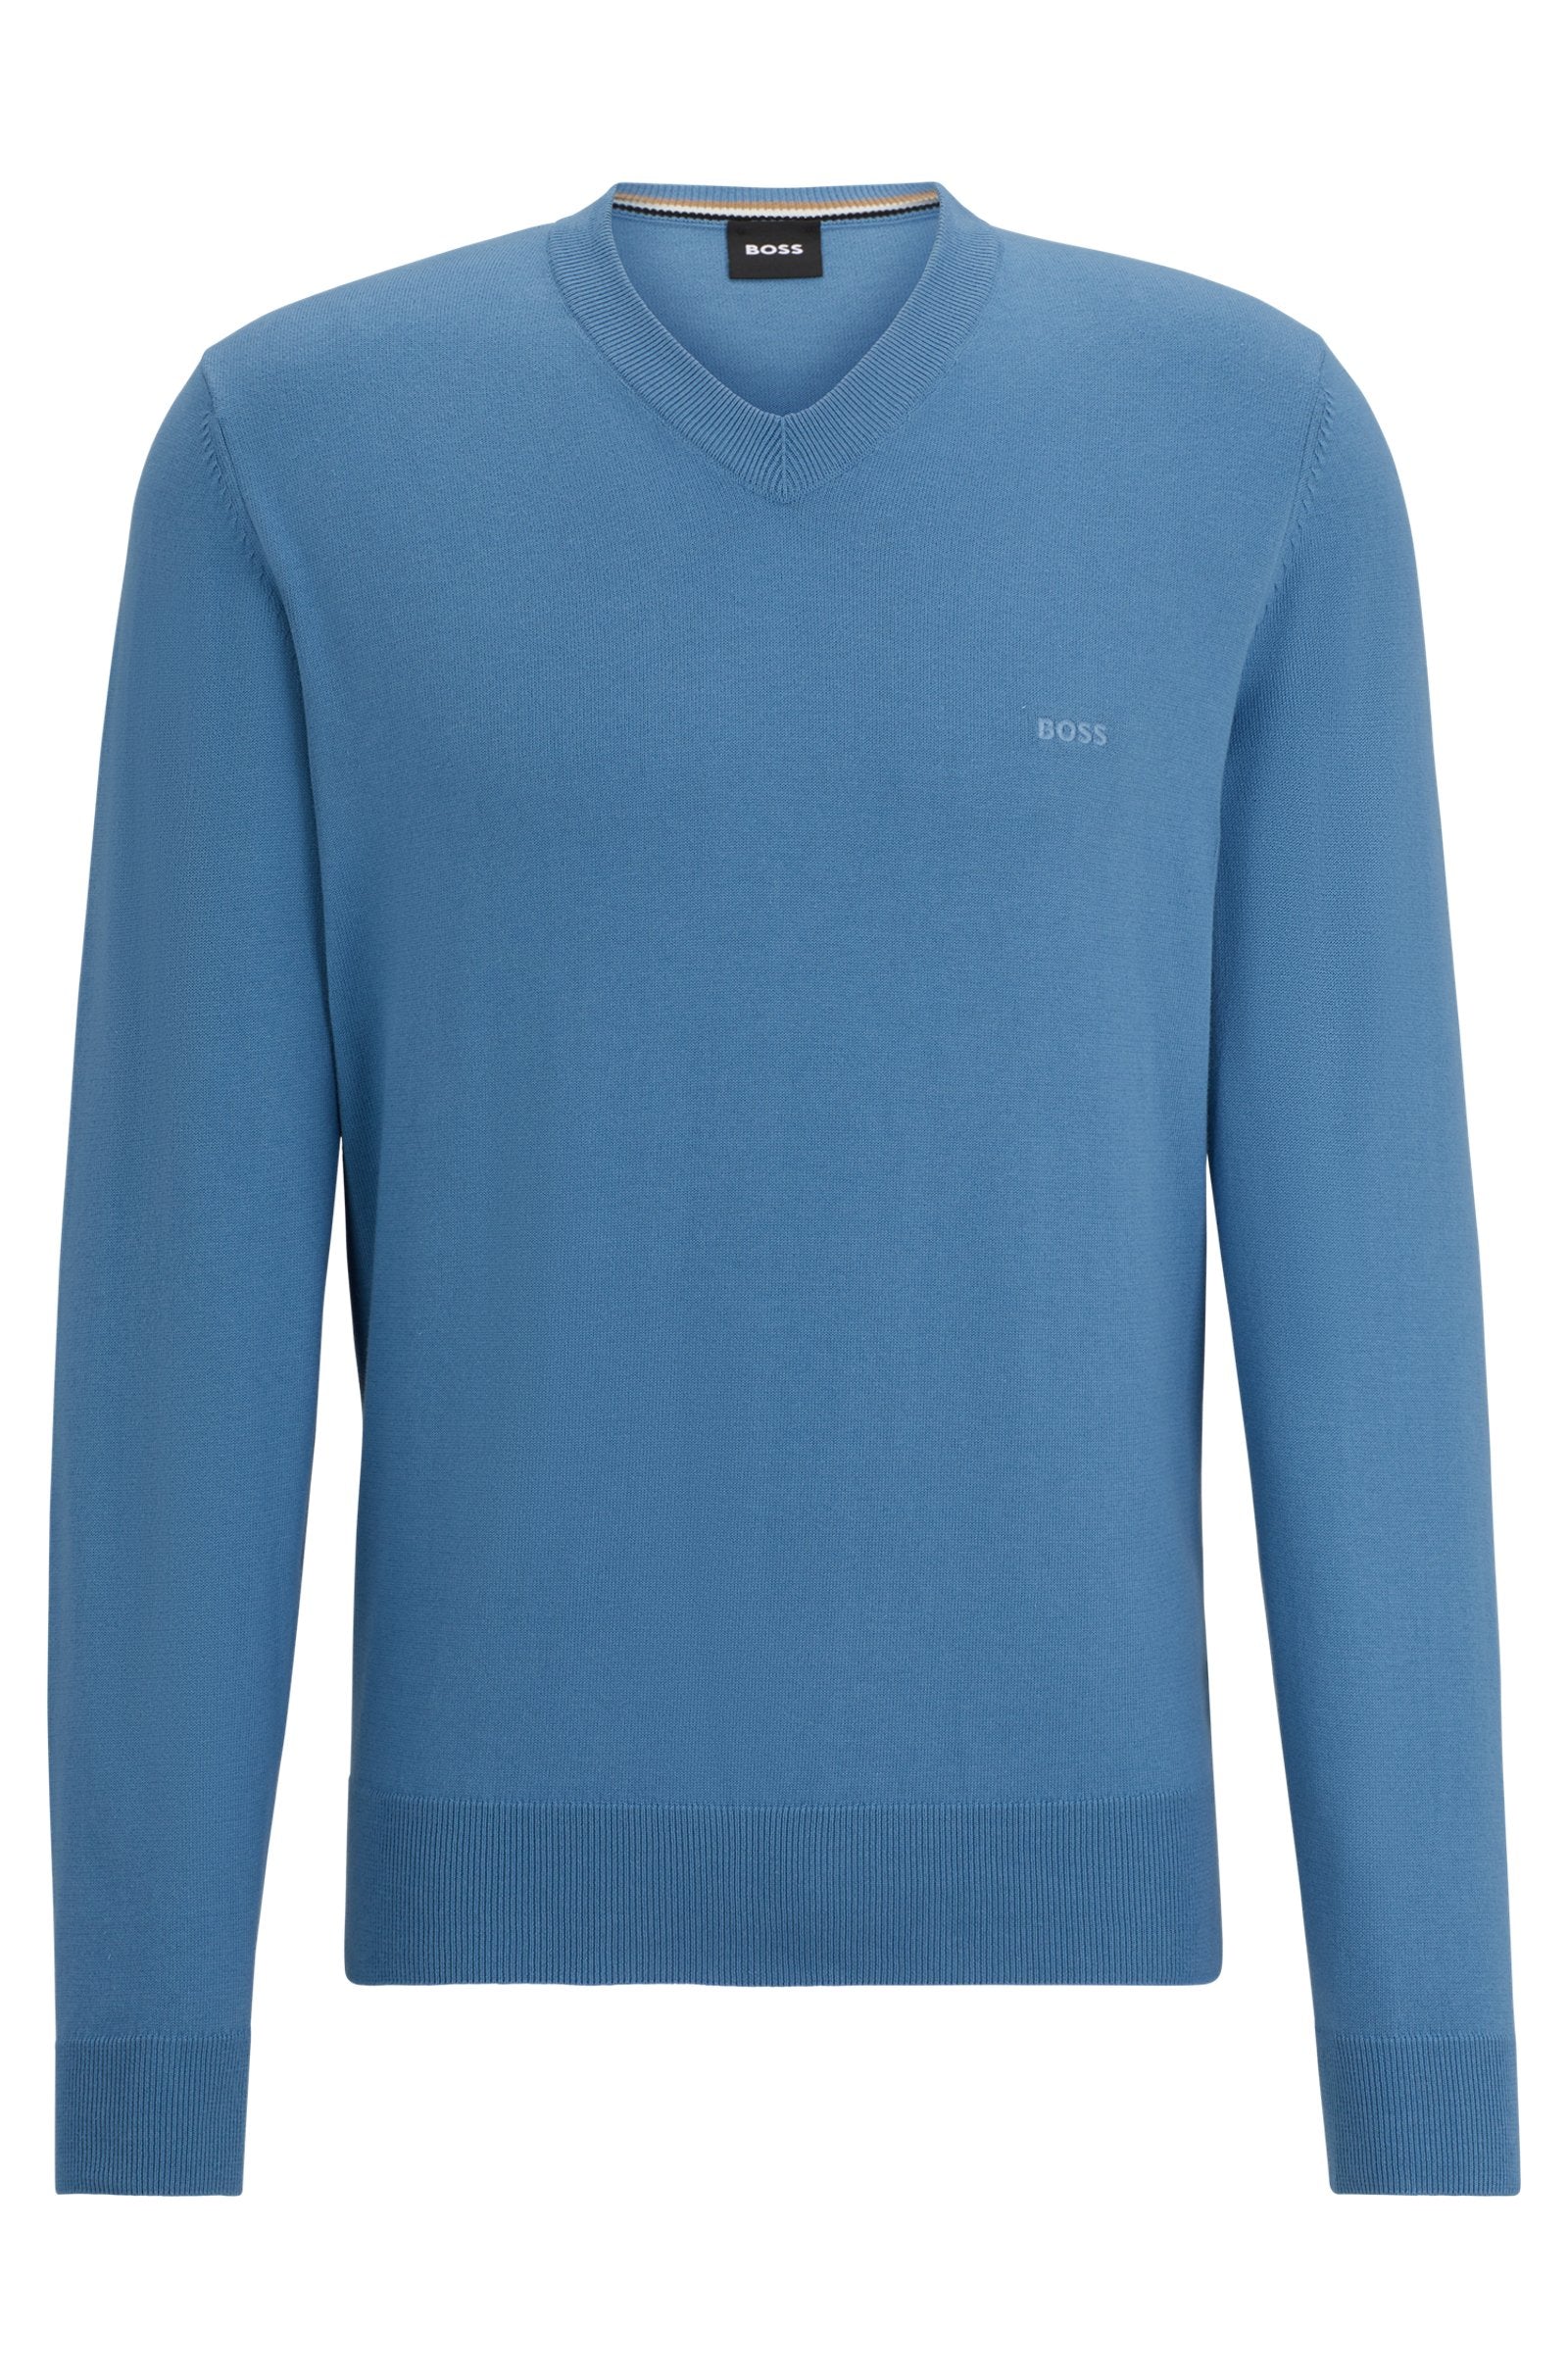 BOSS - PACELLO Light Pastel Blue V-Neck Cotton Sweater 50506042 459